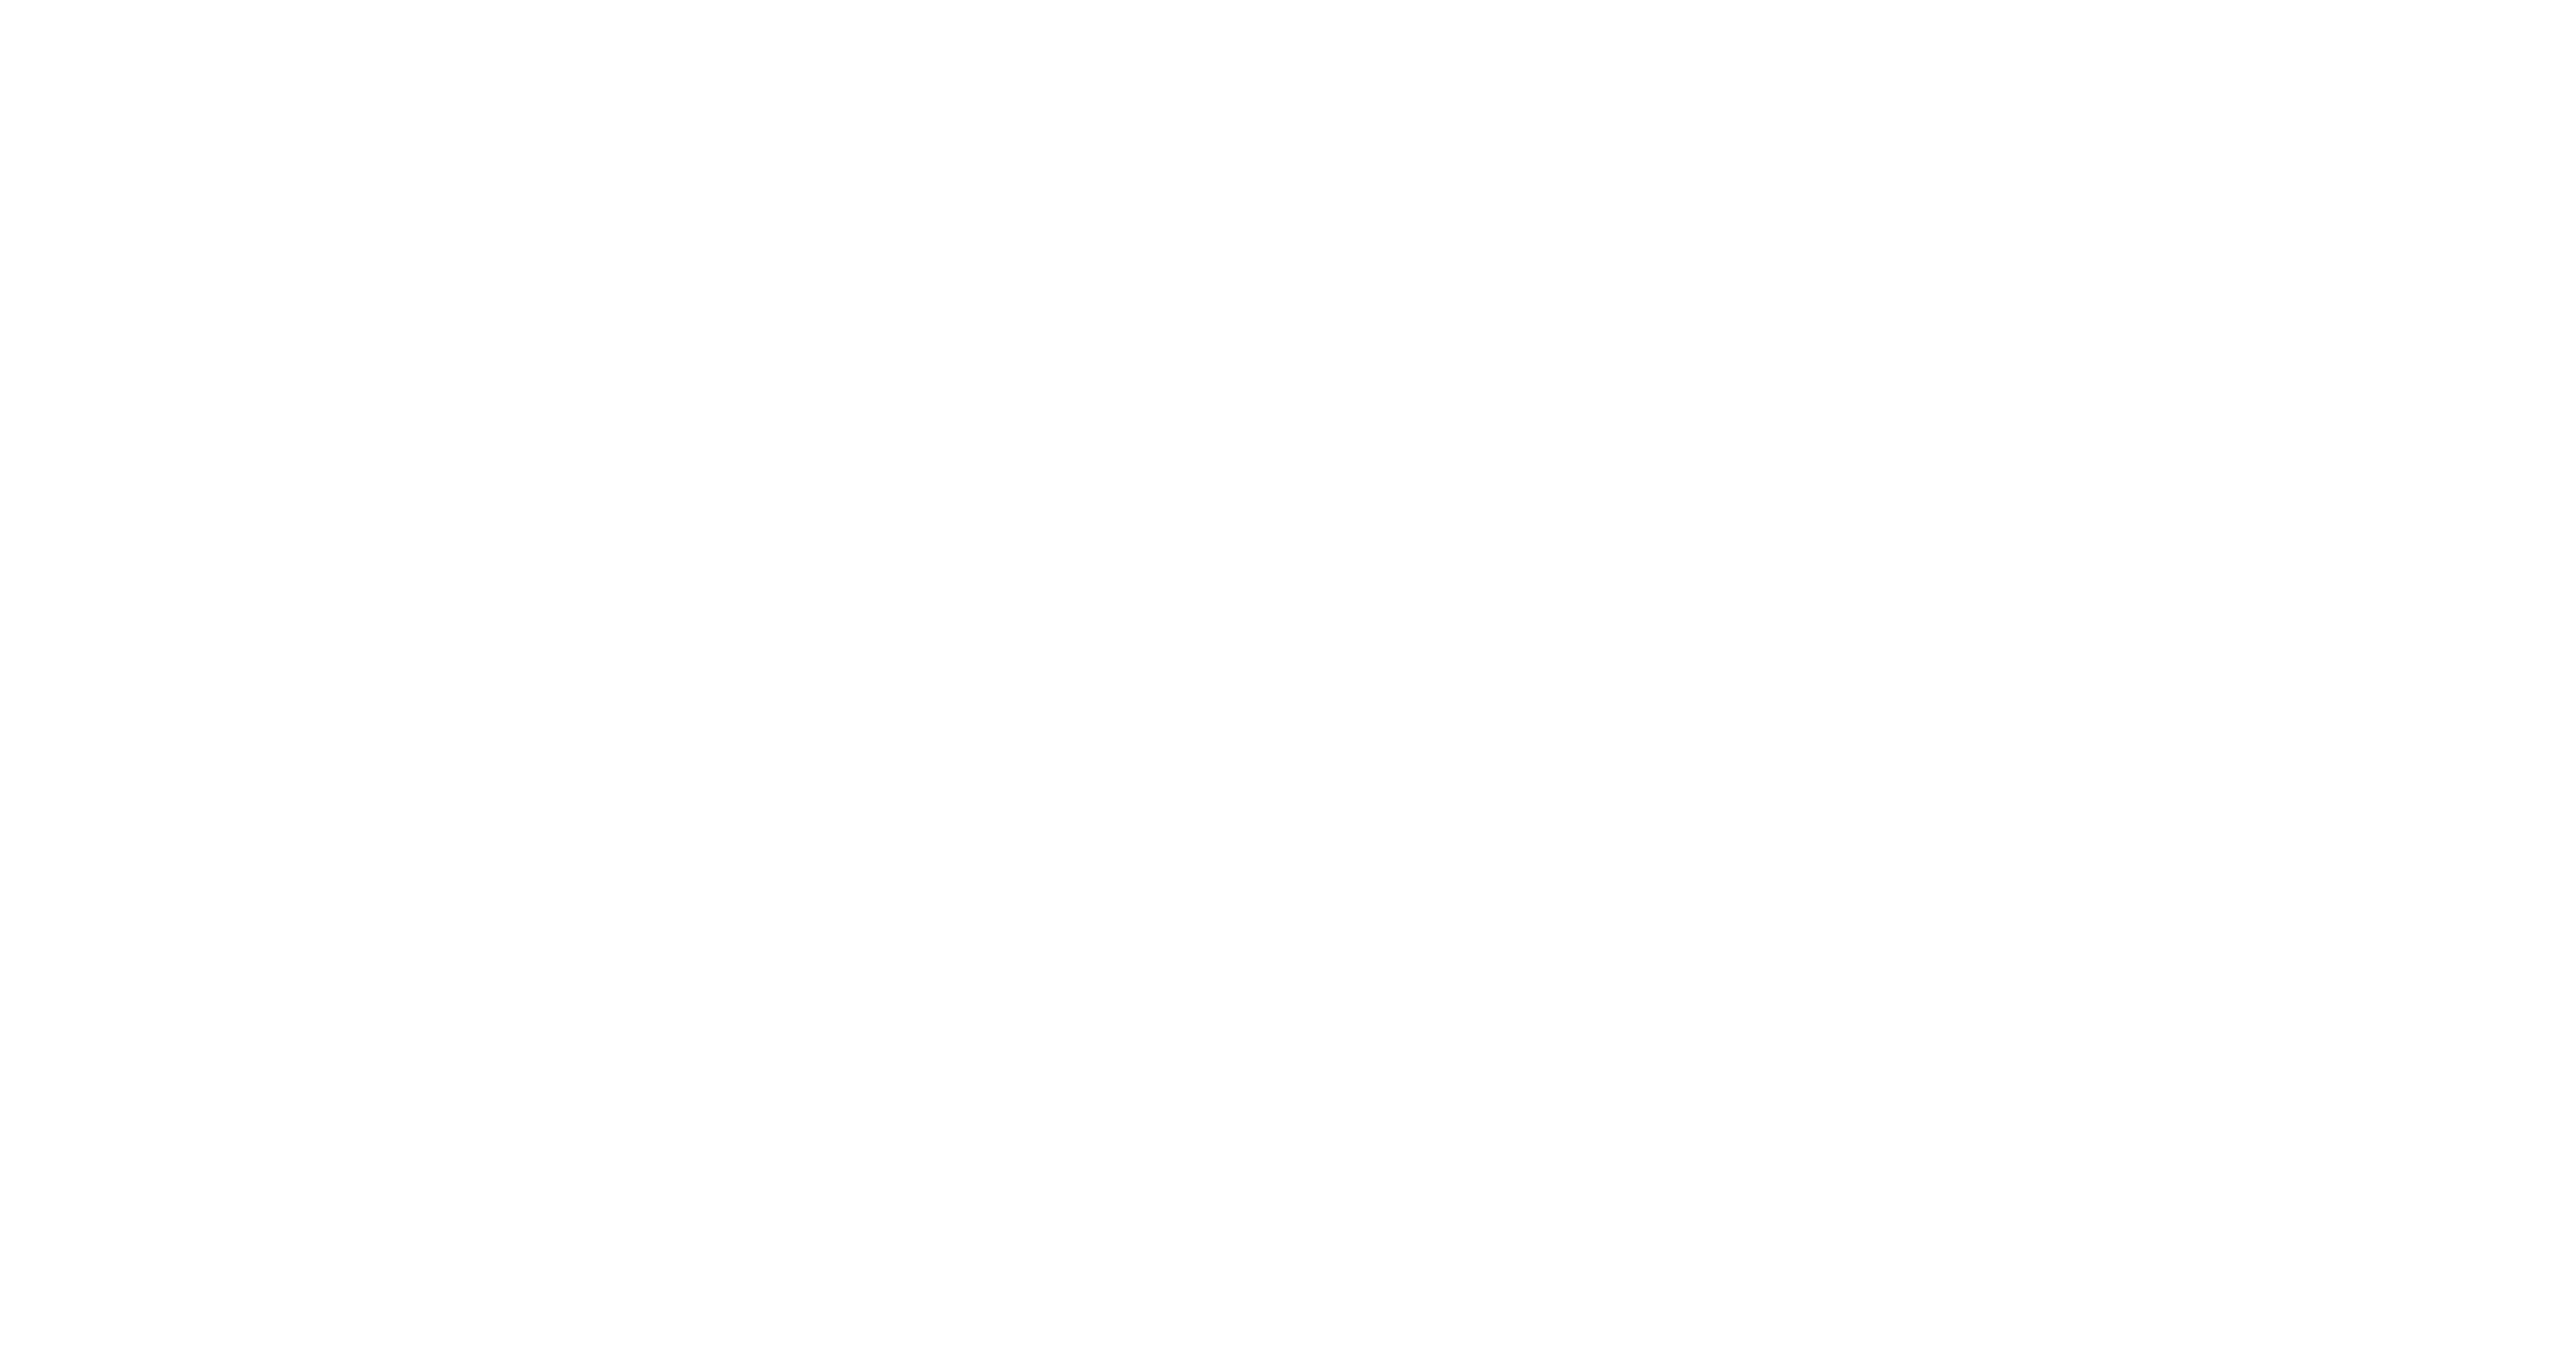 AFP Logo AmNord Wht.png